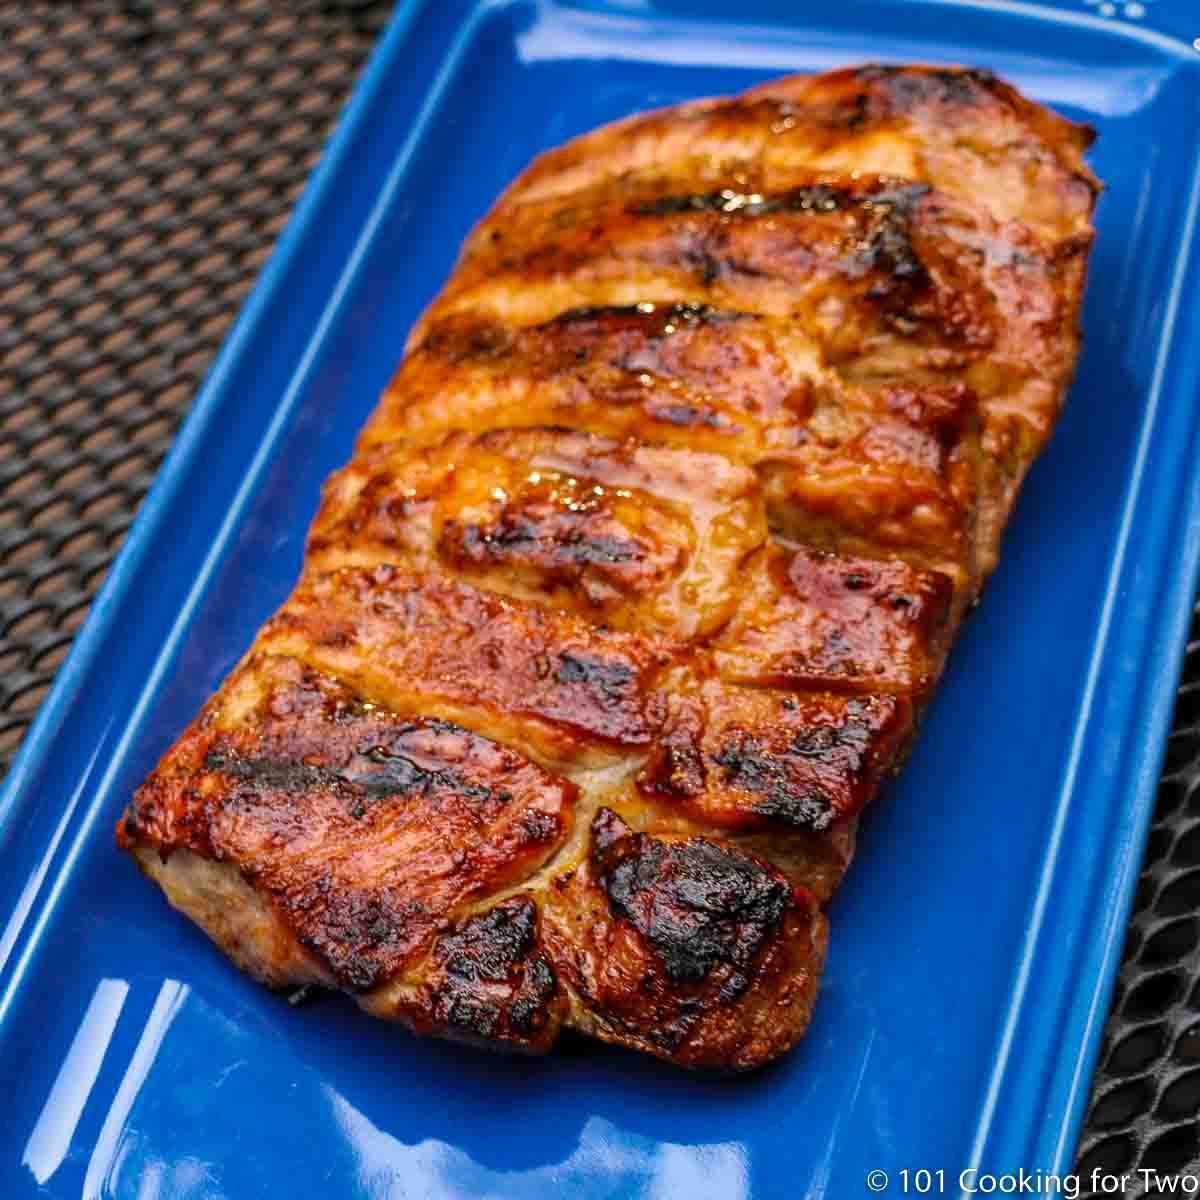 A done boneless pork rib slab on a blue plate.